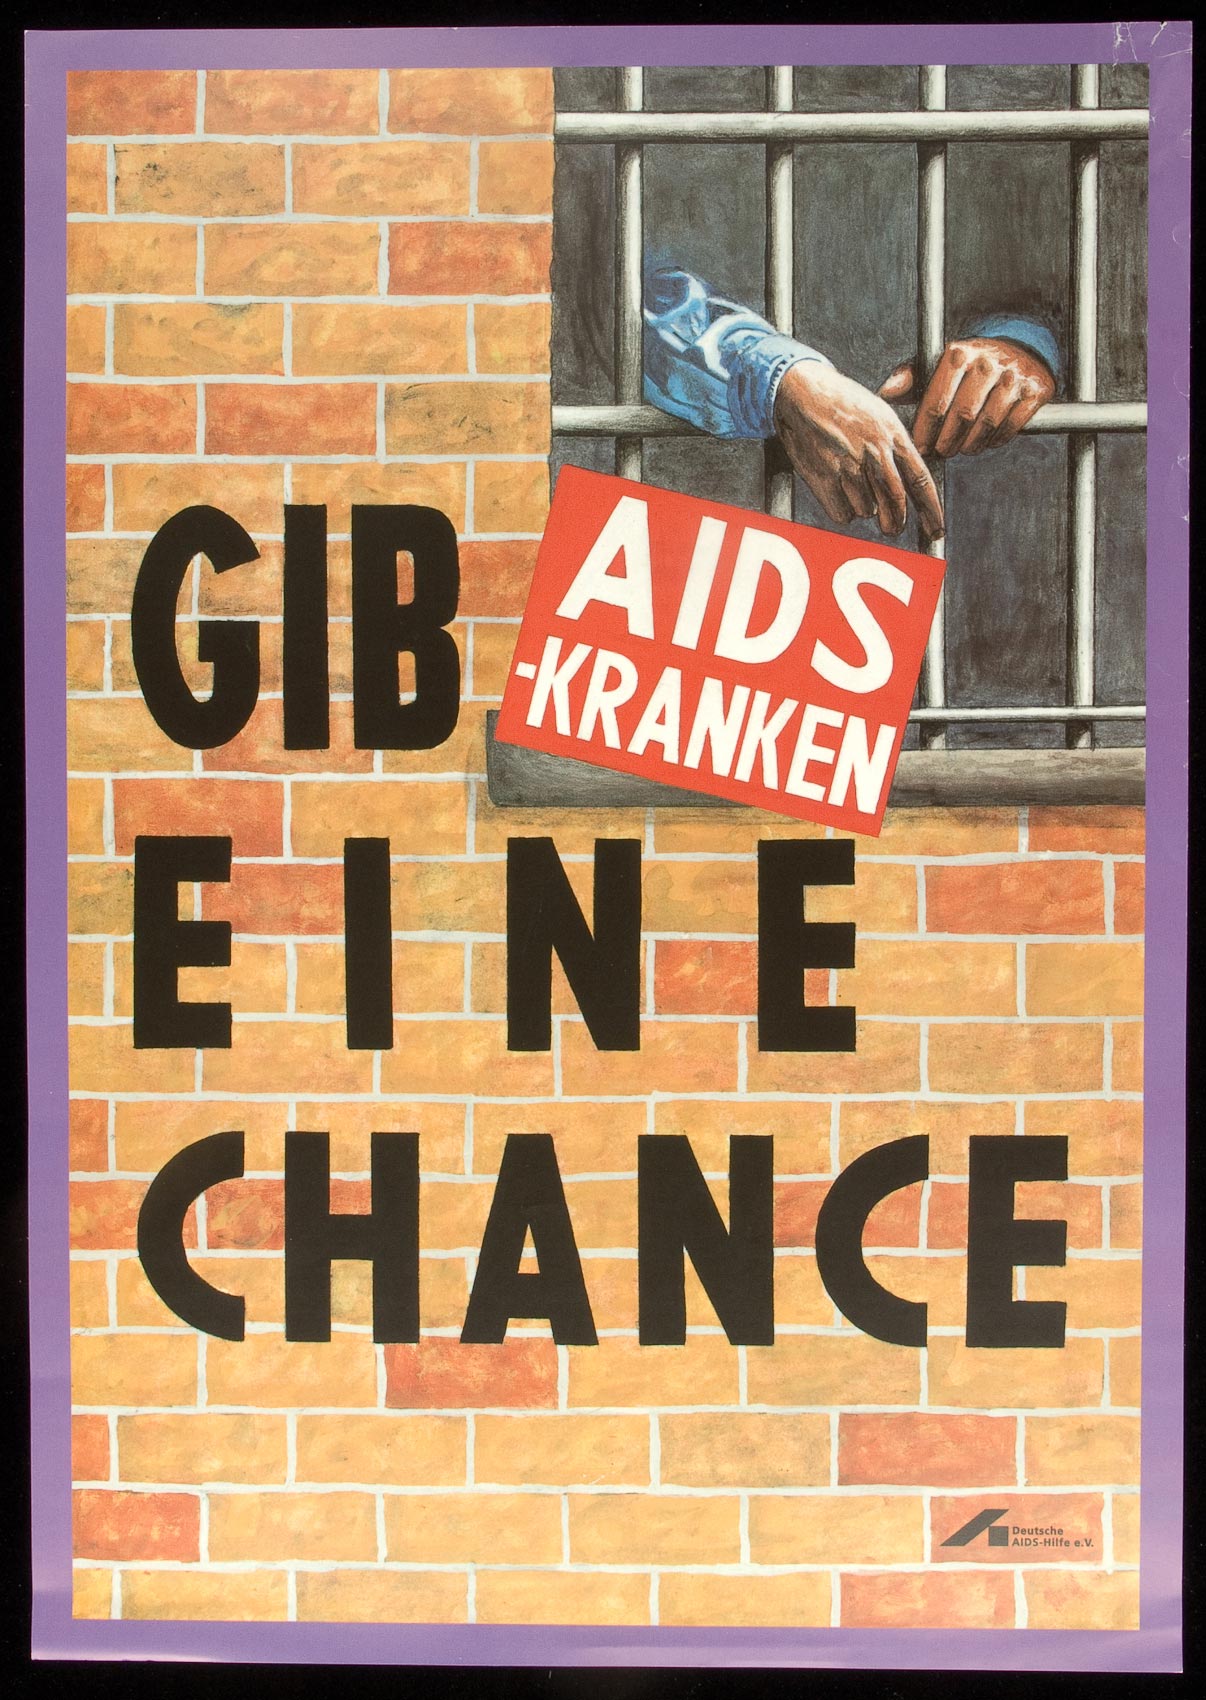 German AIDS poster shows man behind prison bars